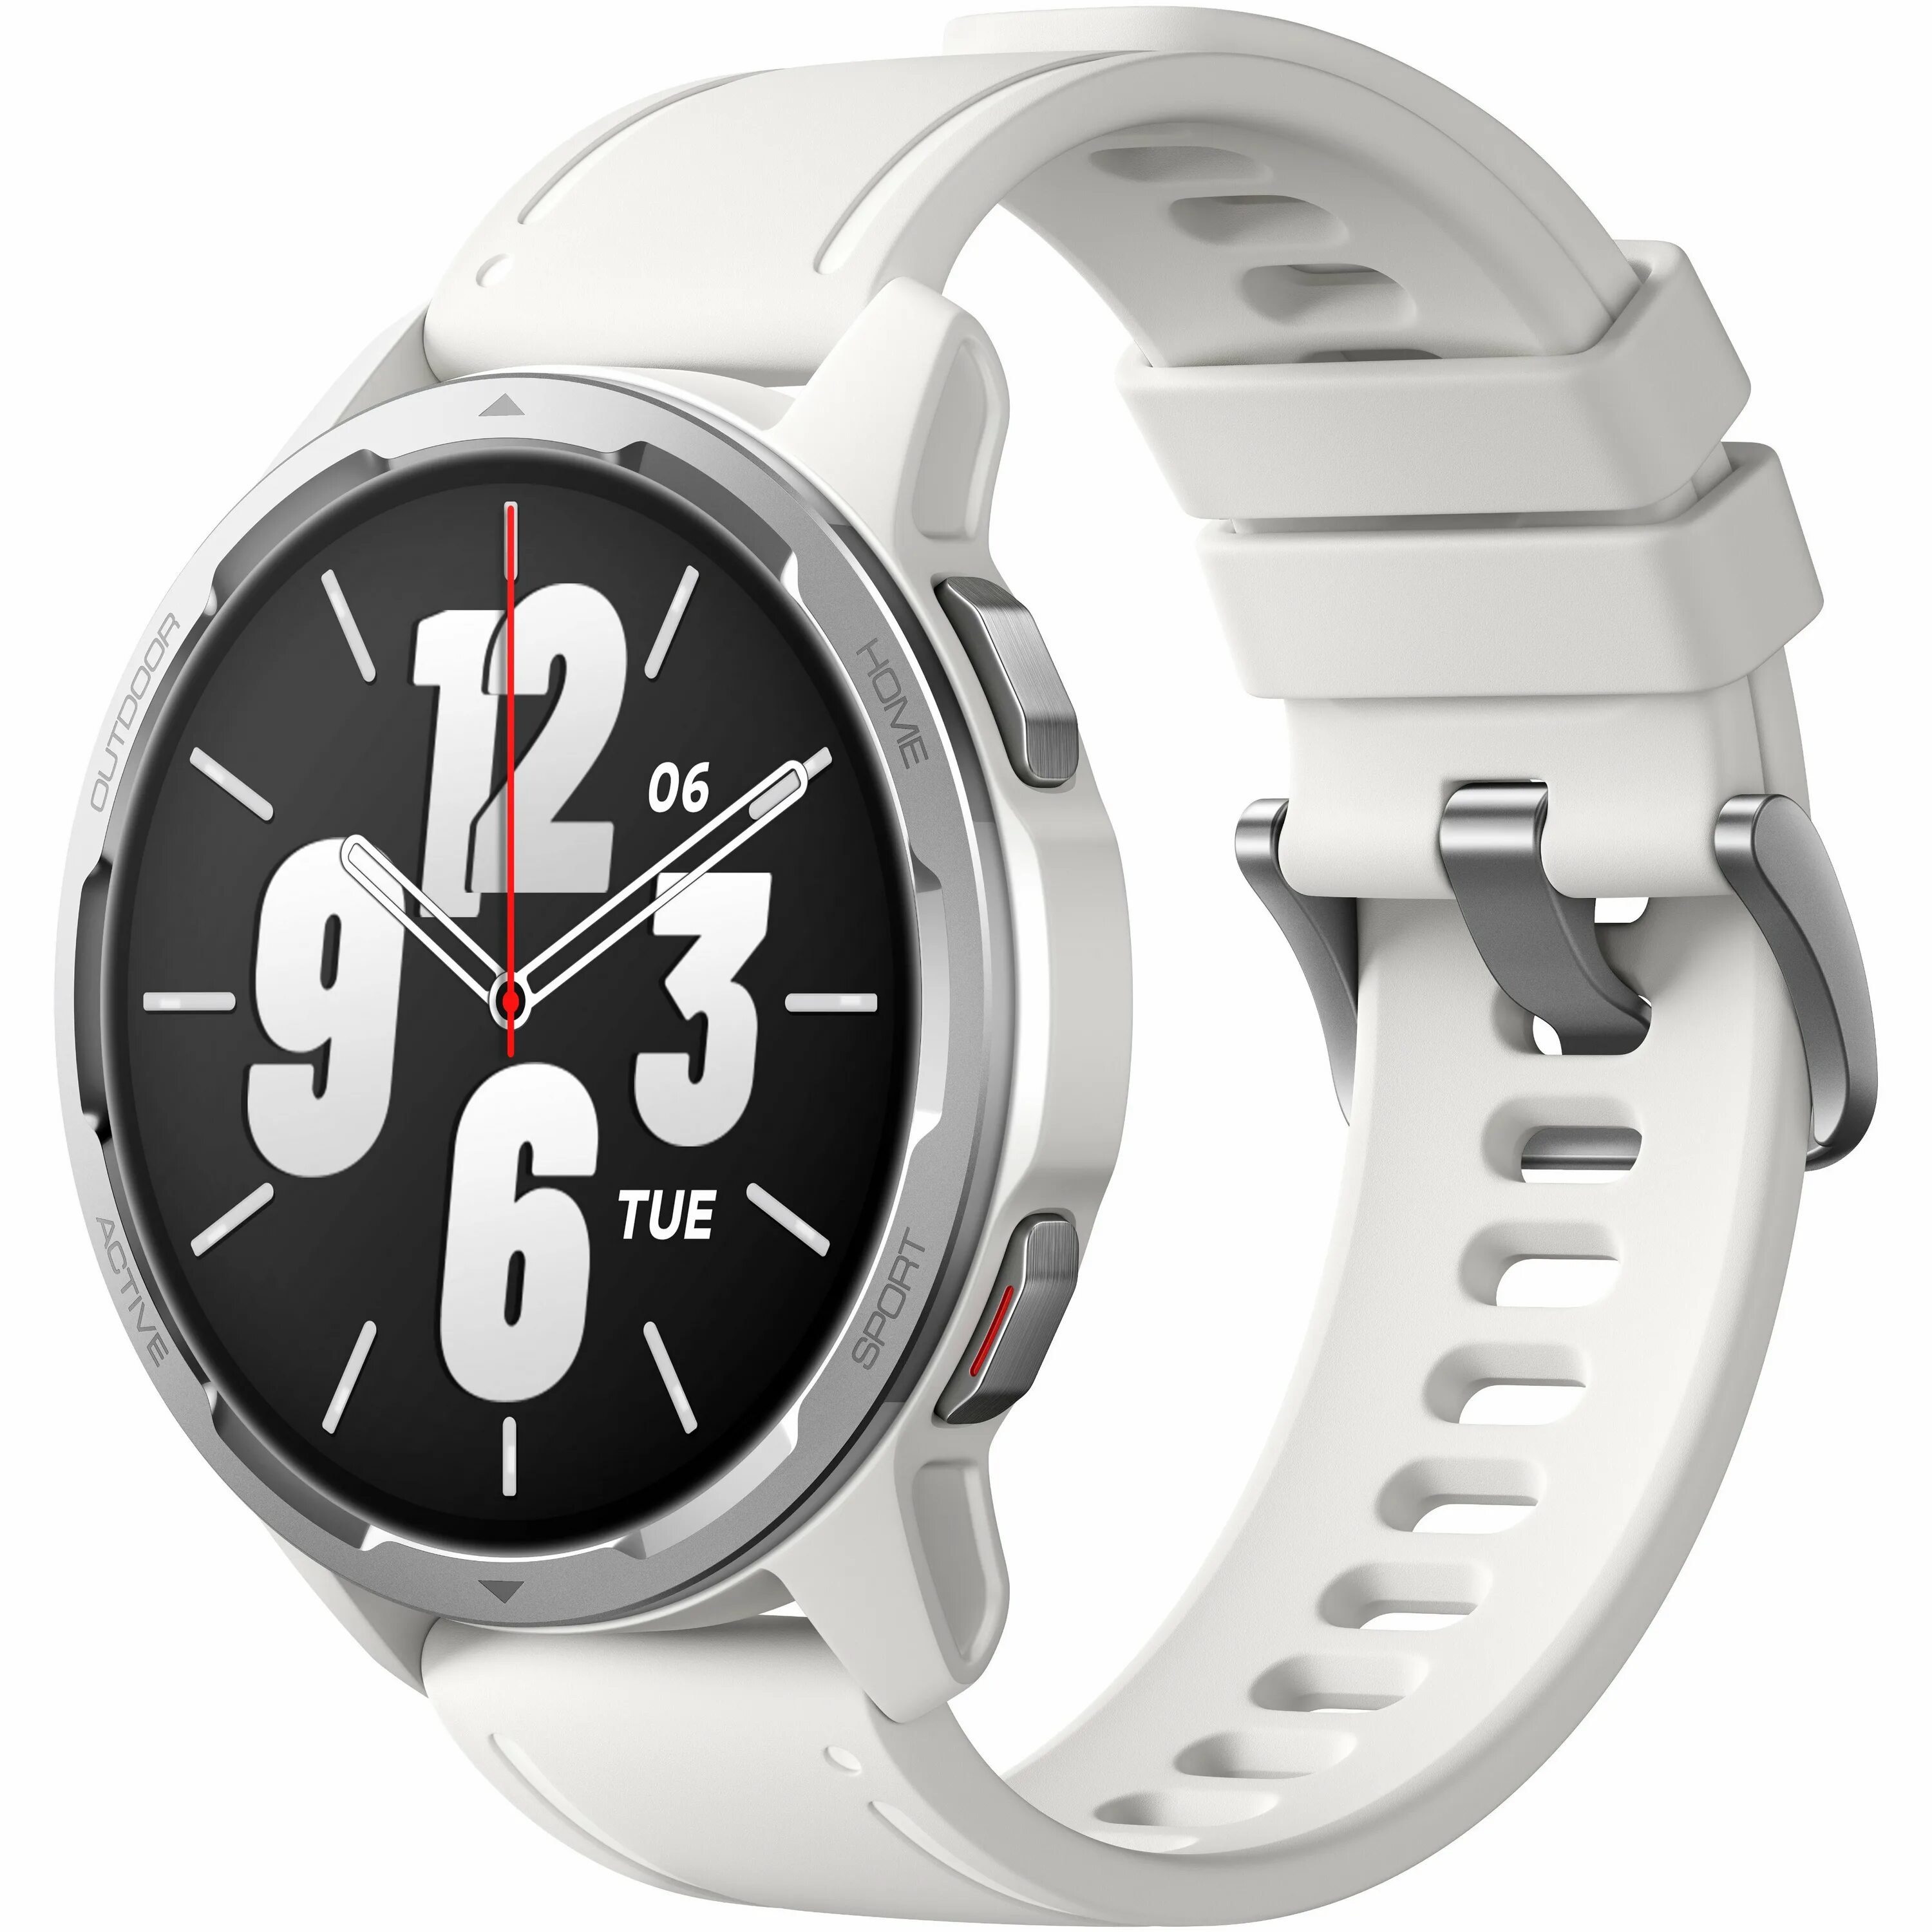 Watch active 1. Часы Xiaomi s1 Active. Часы Сяоми вотч s1 Active. Часы Xiaomi watch s1. Смарт-часы Xiaomi watch s1 Active gl Moon White.